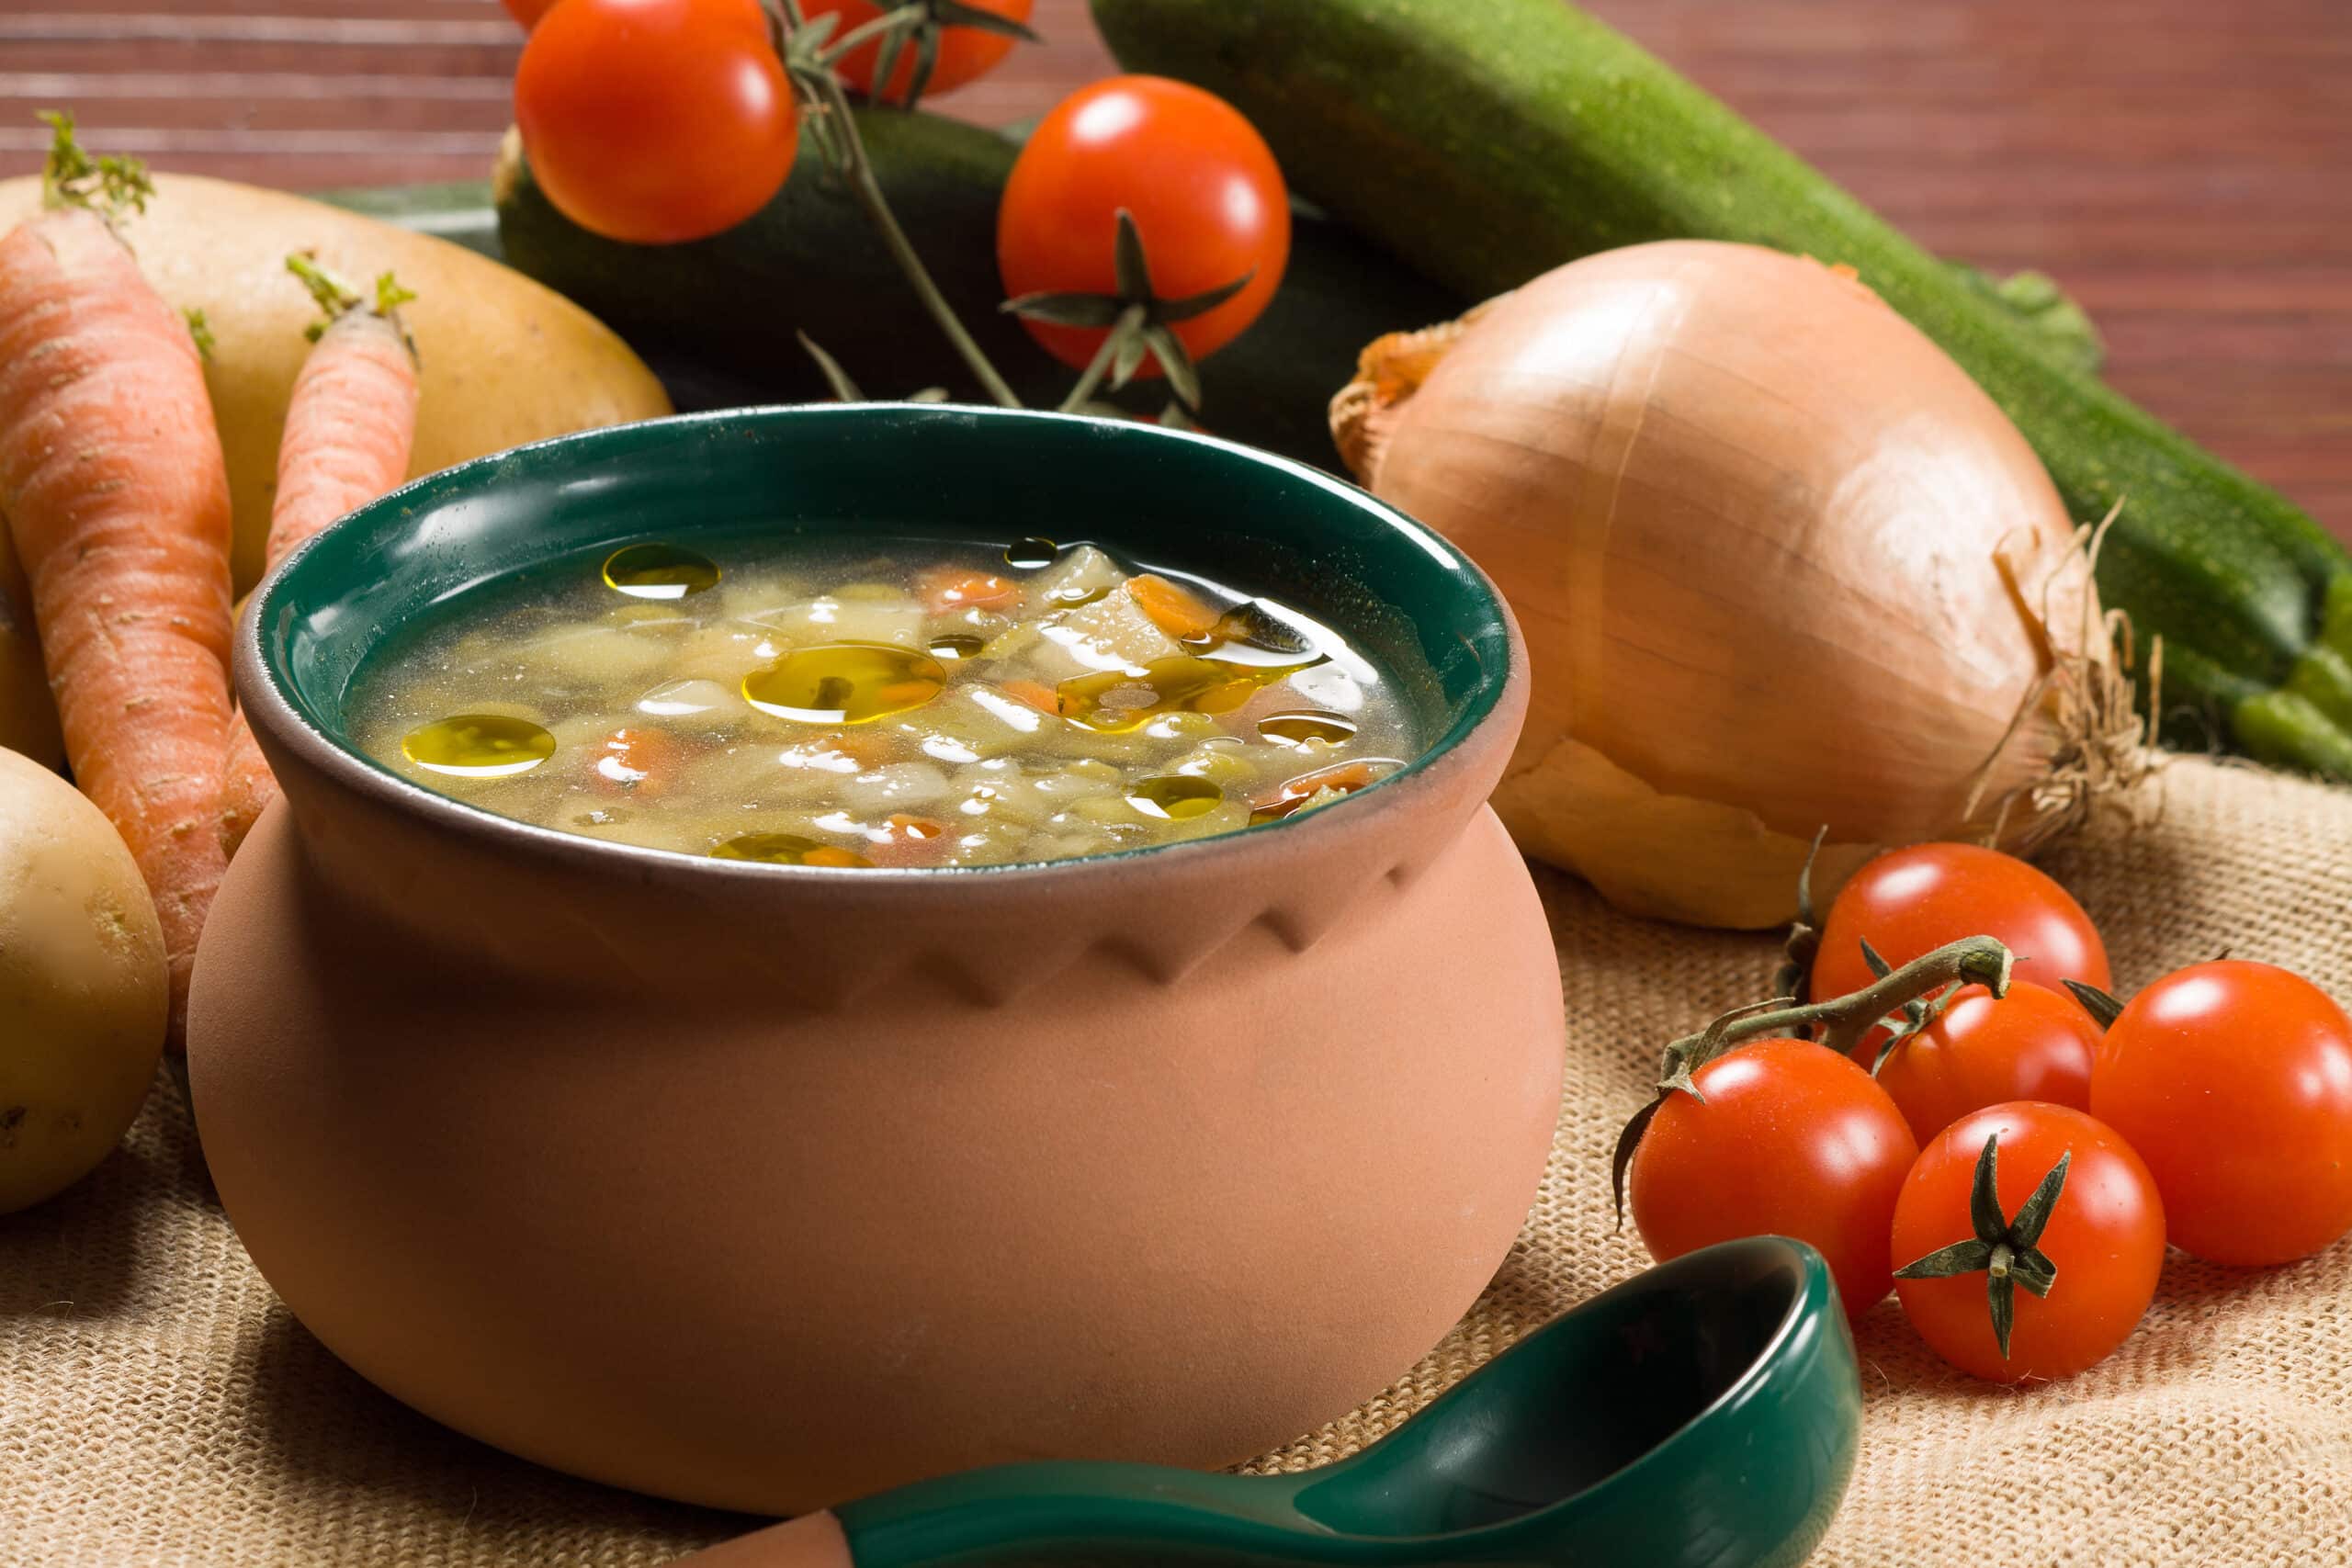 Crock of healthy Minestrone - Italian vegetable soup